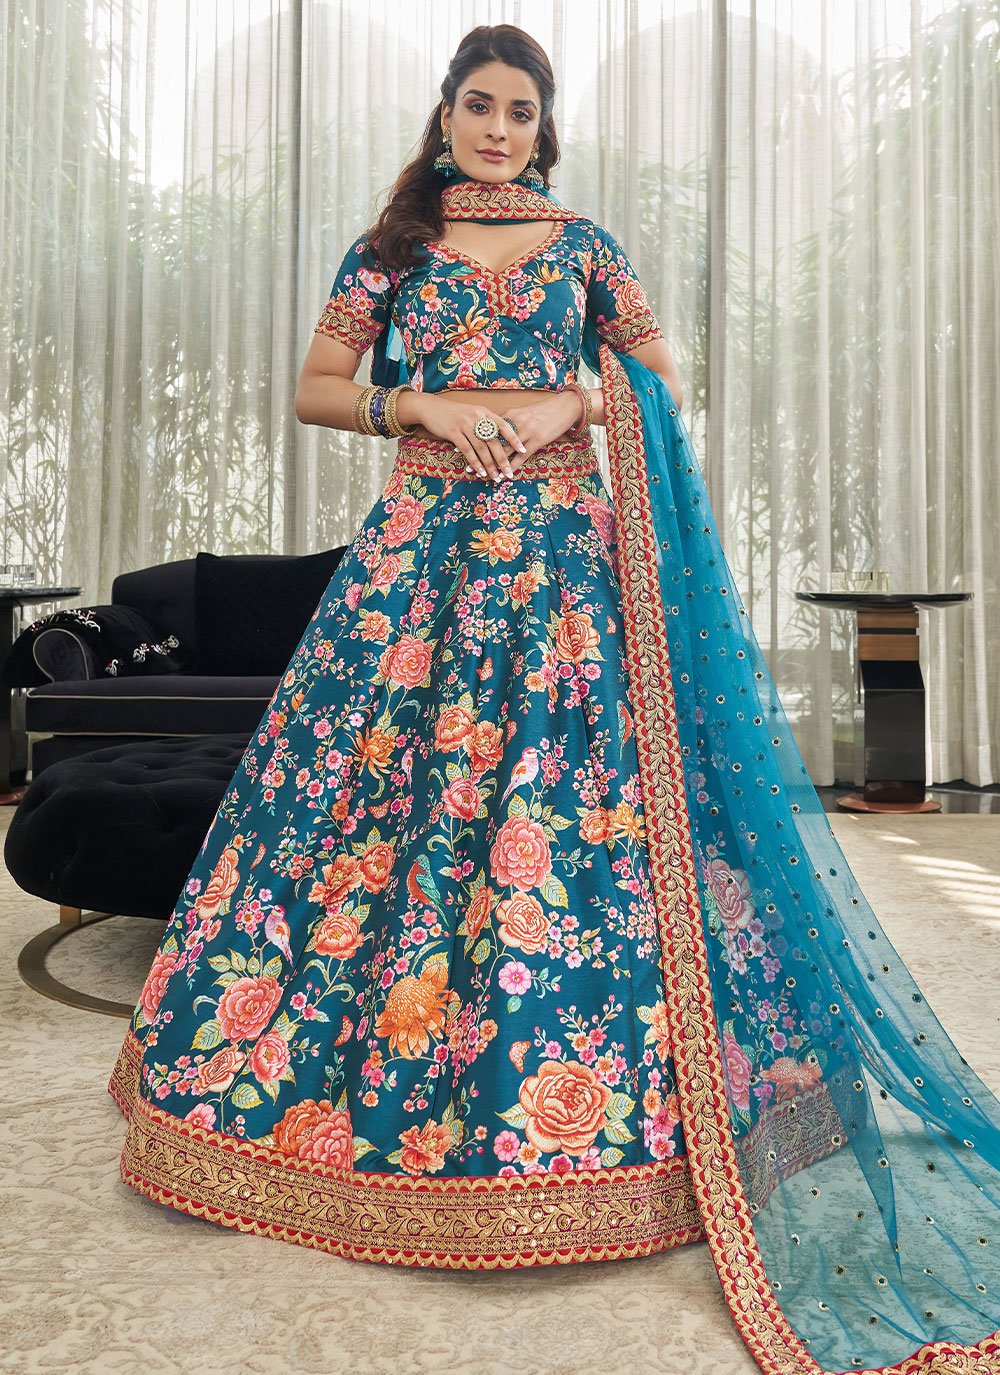 Women's Ethnic Digital Print Lehenga Choli Wedding Party Dance Lengha Skirt  Wear | eBay